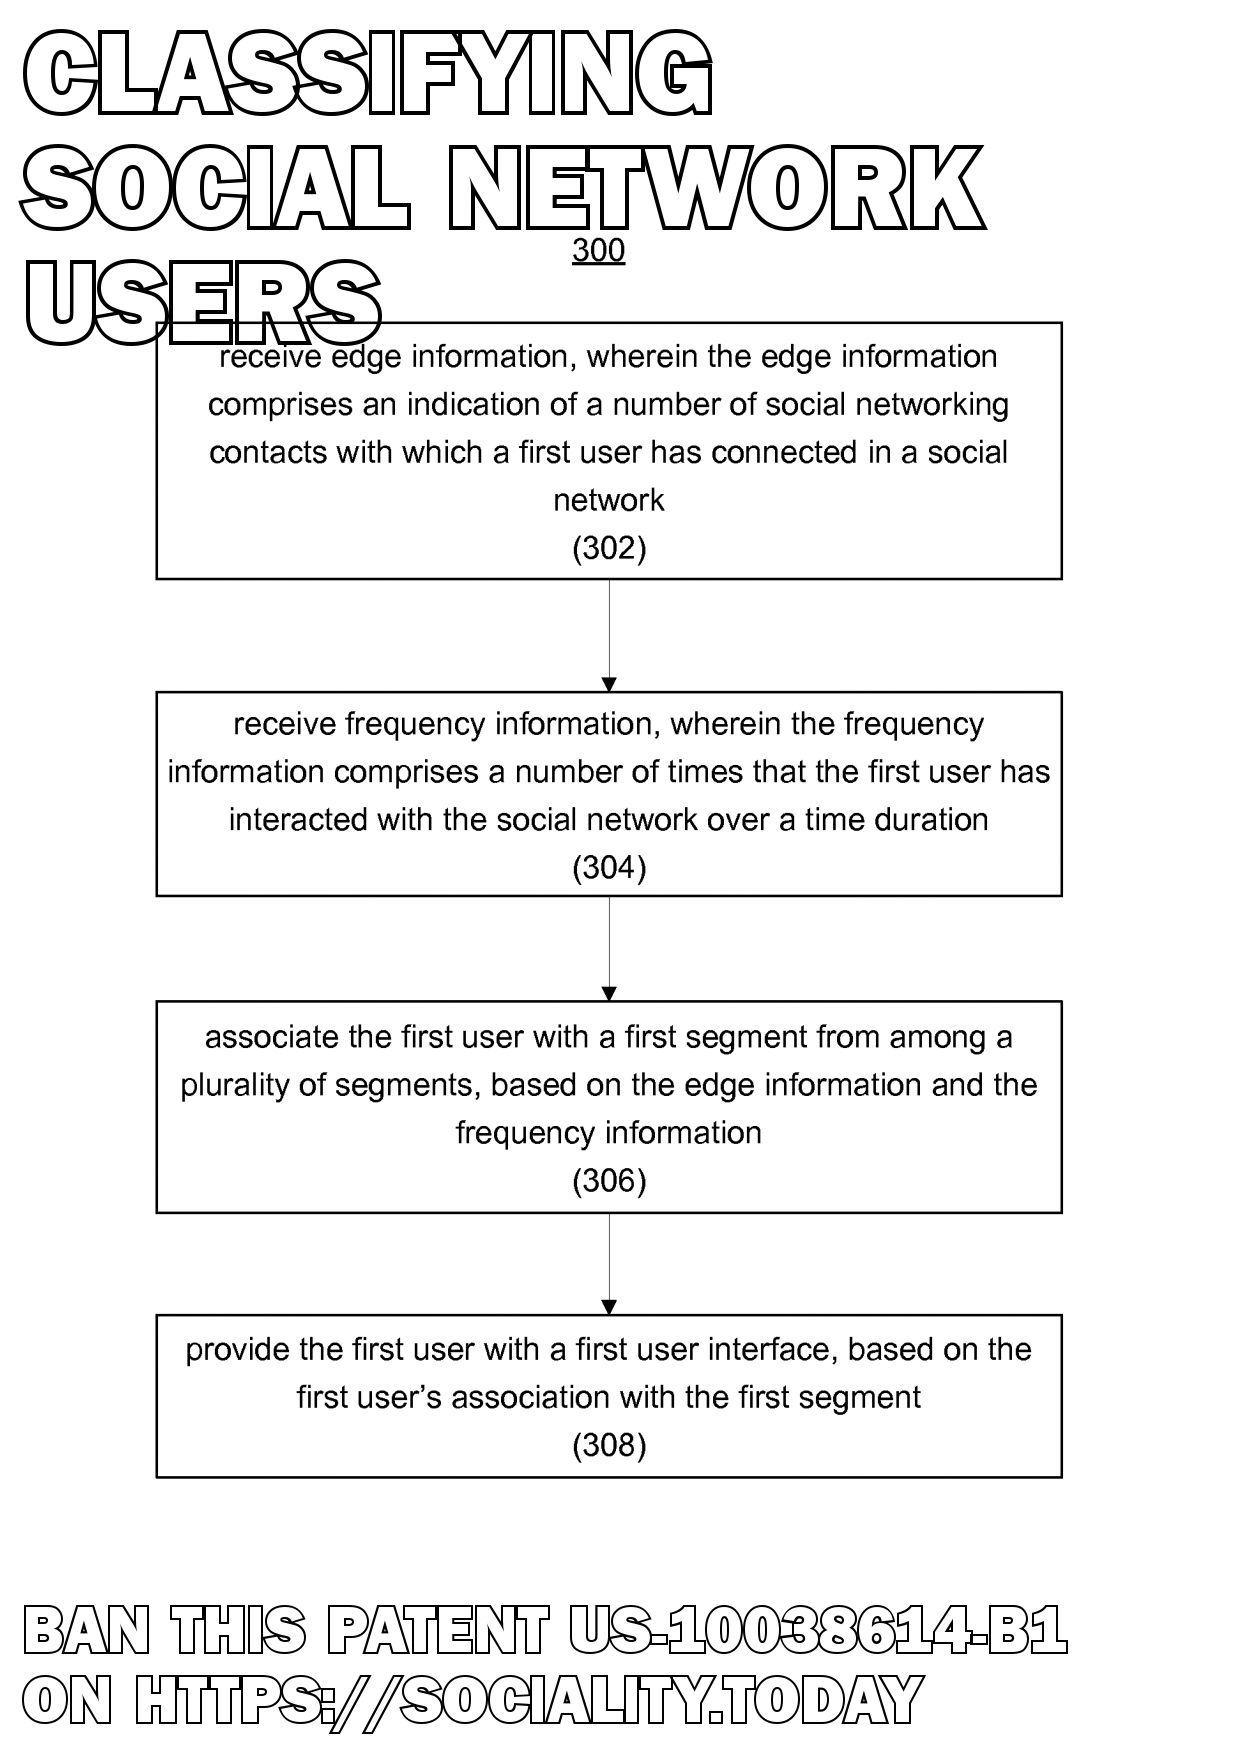 Classifying social network users  - US-10038614-B1